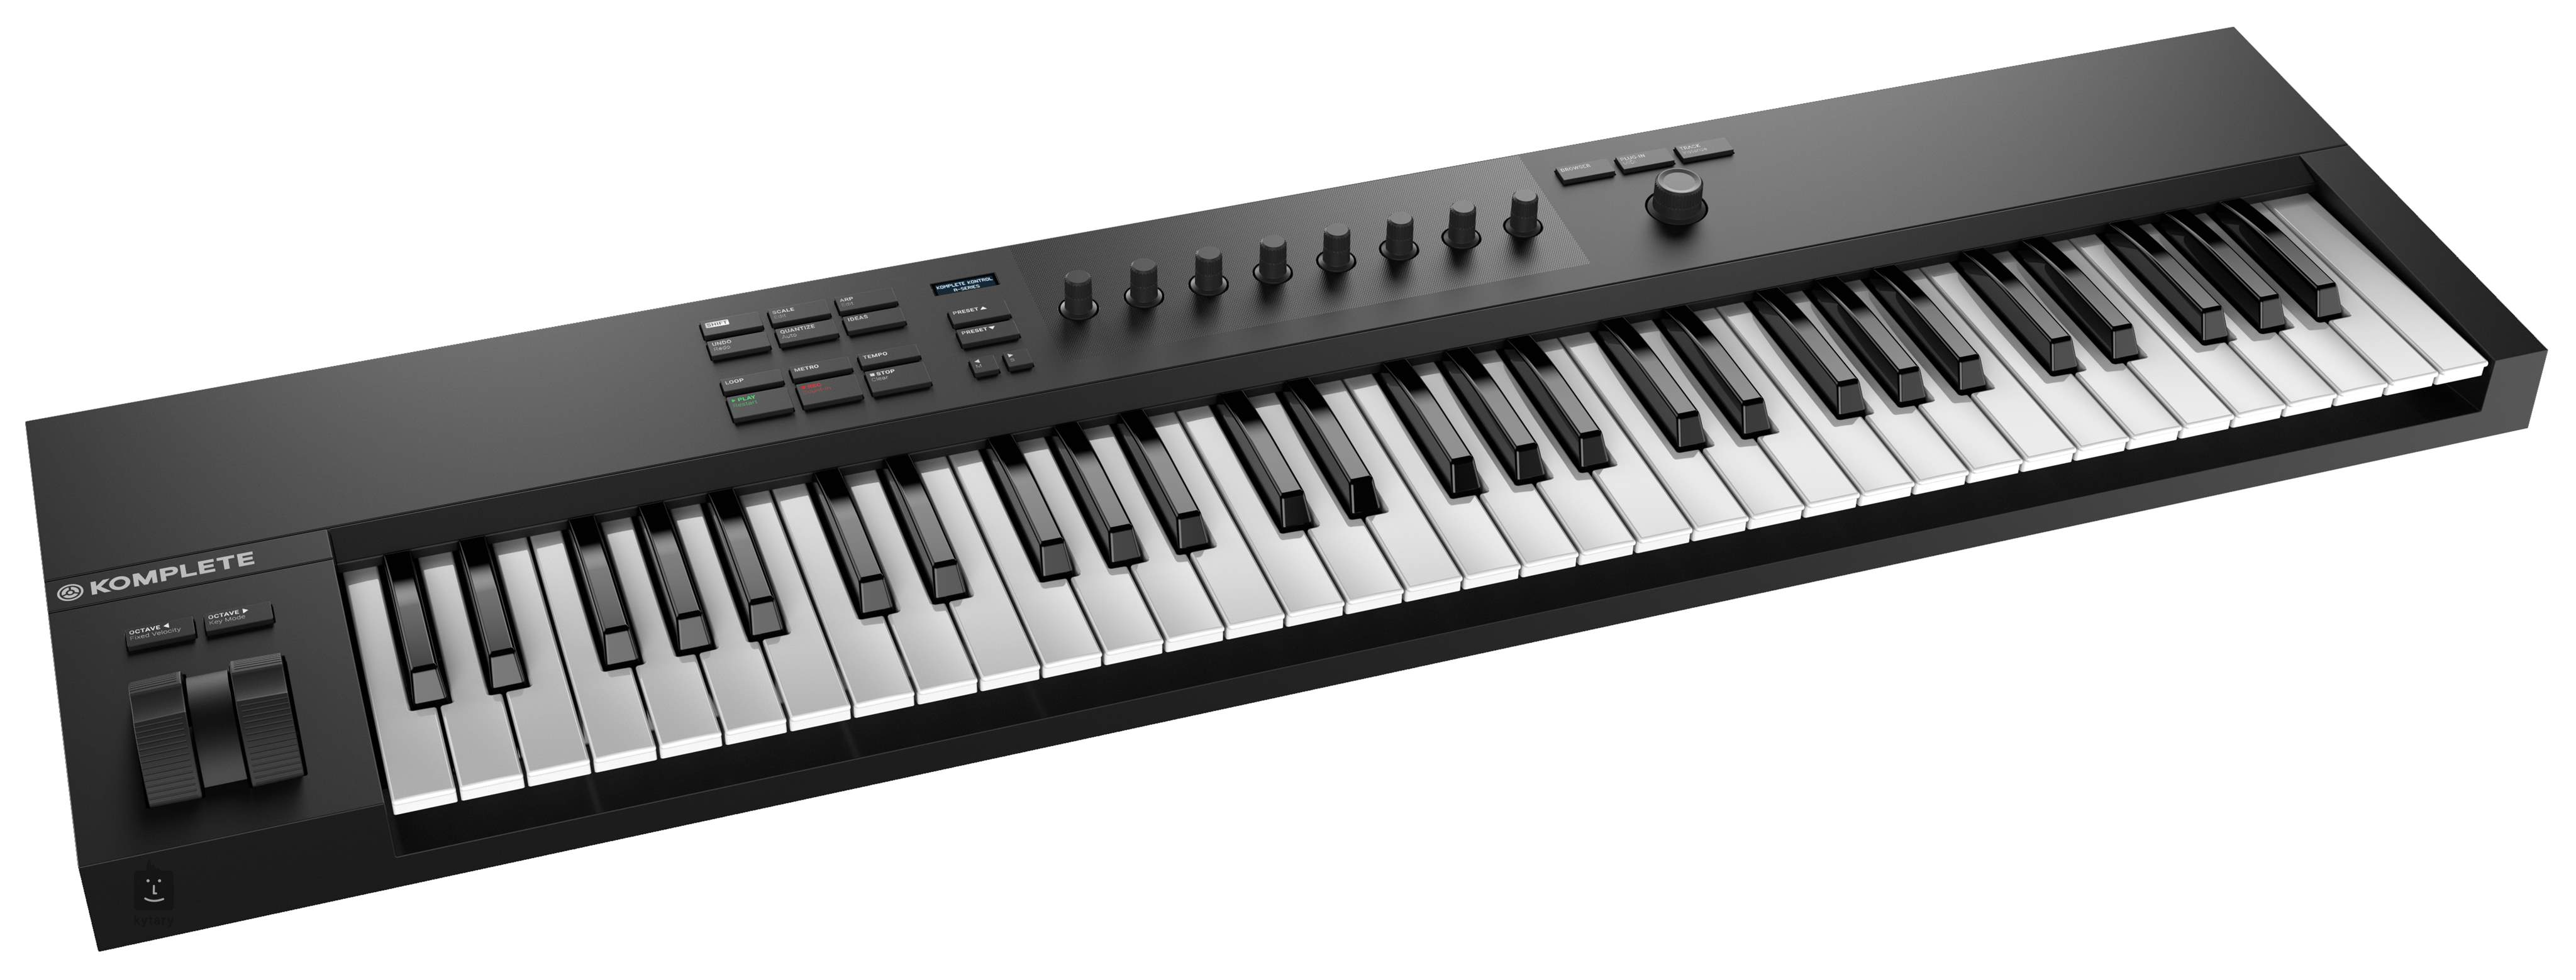 native instruments keyboard a61